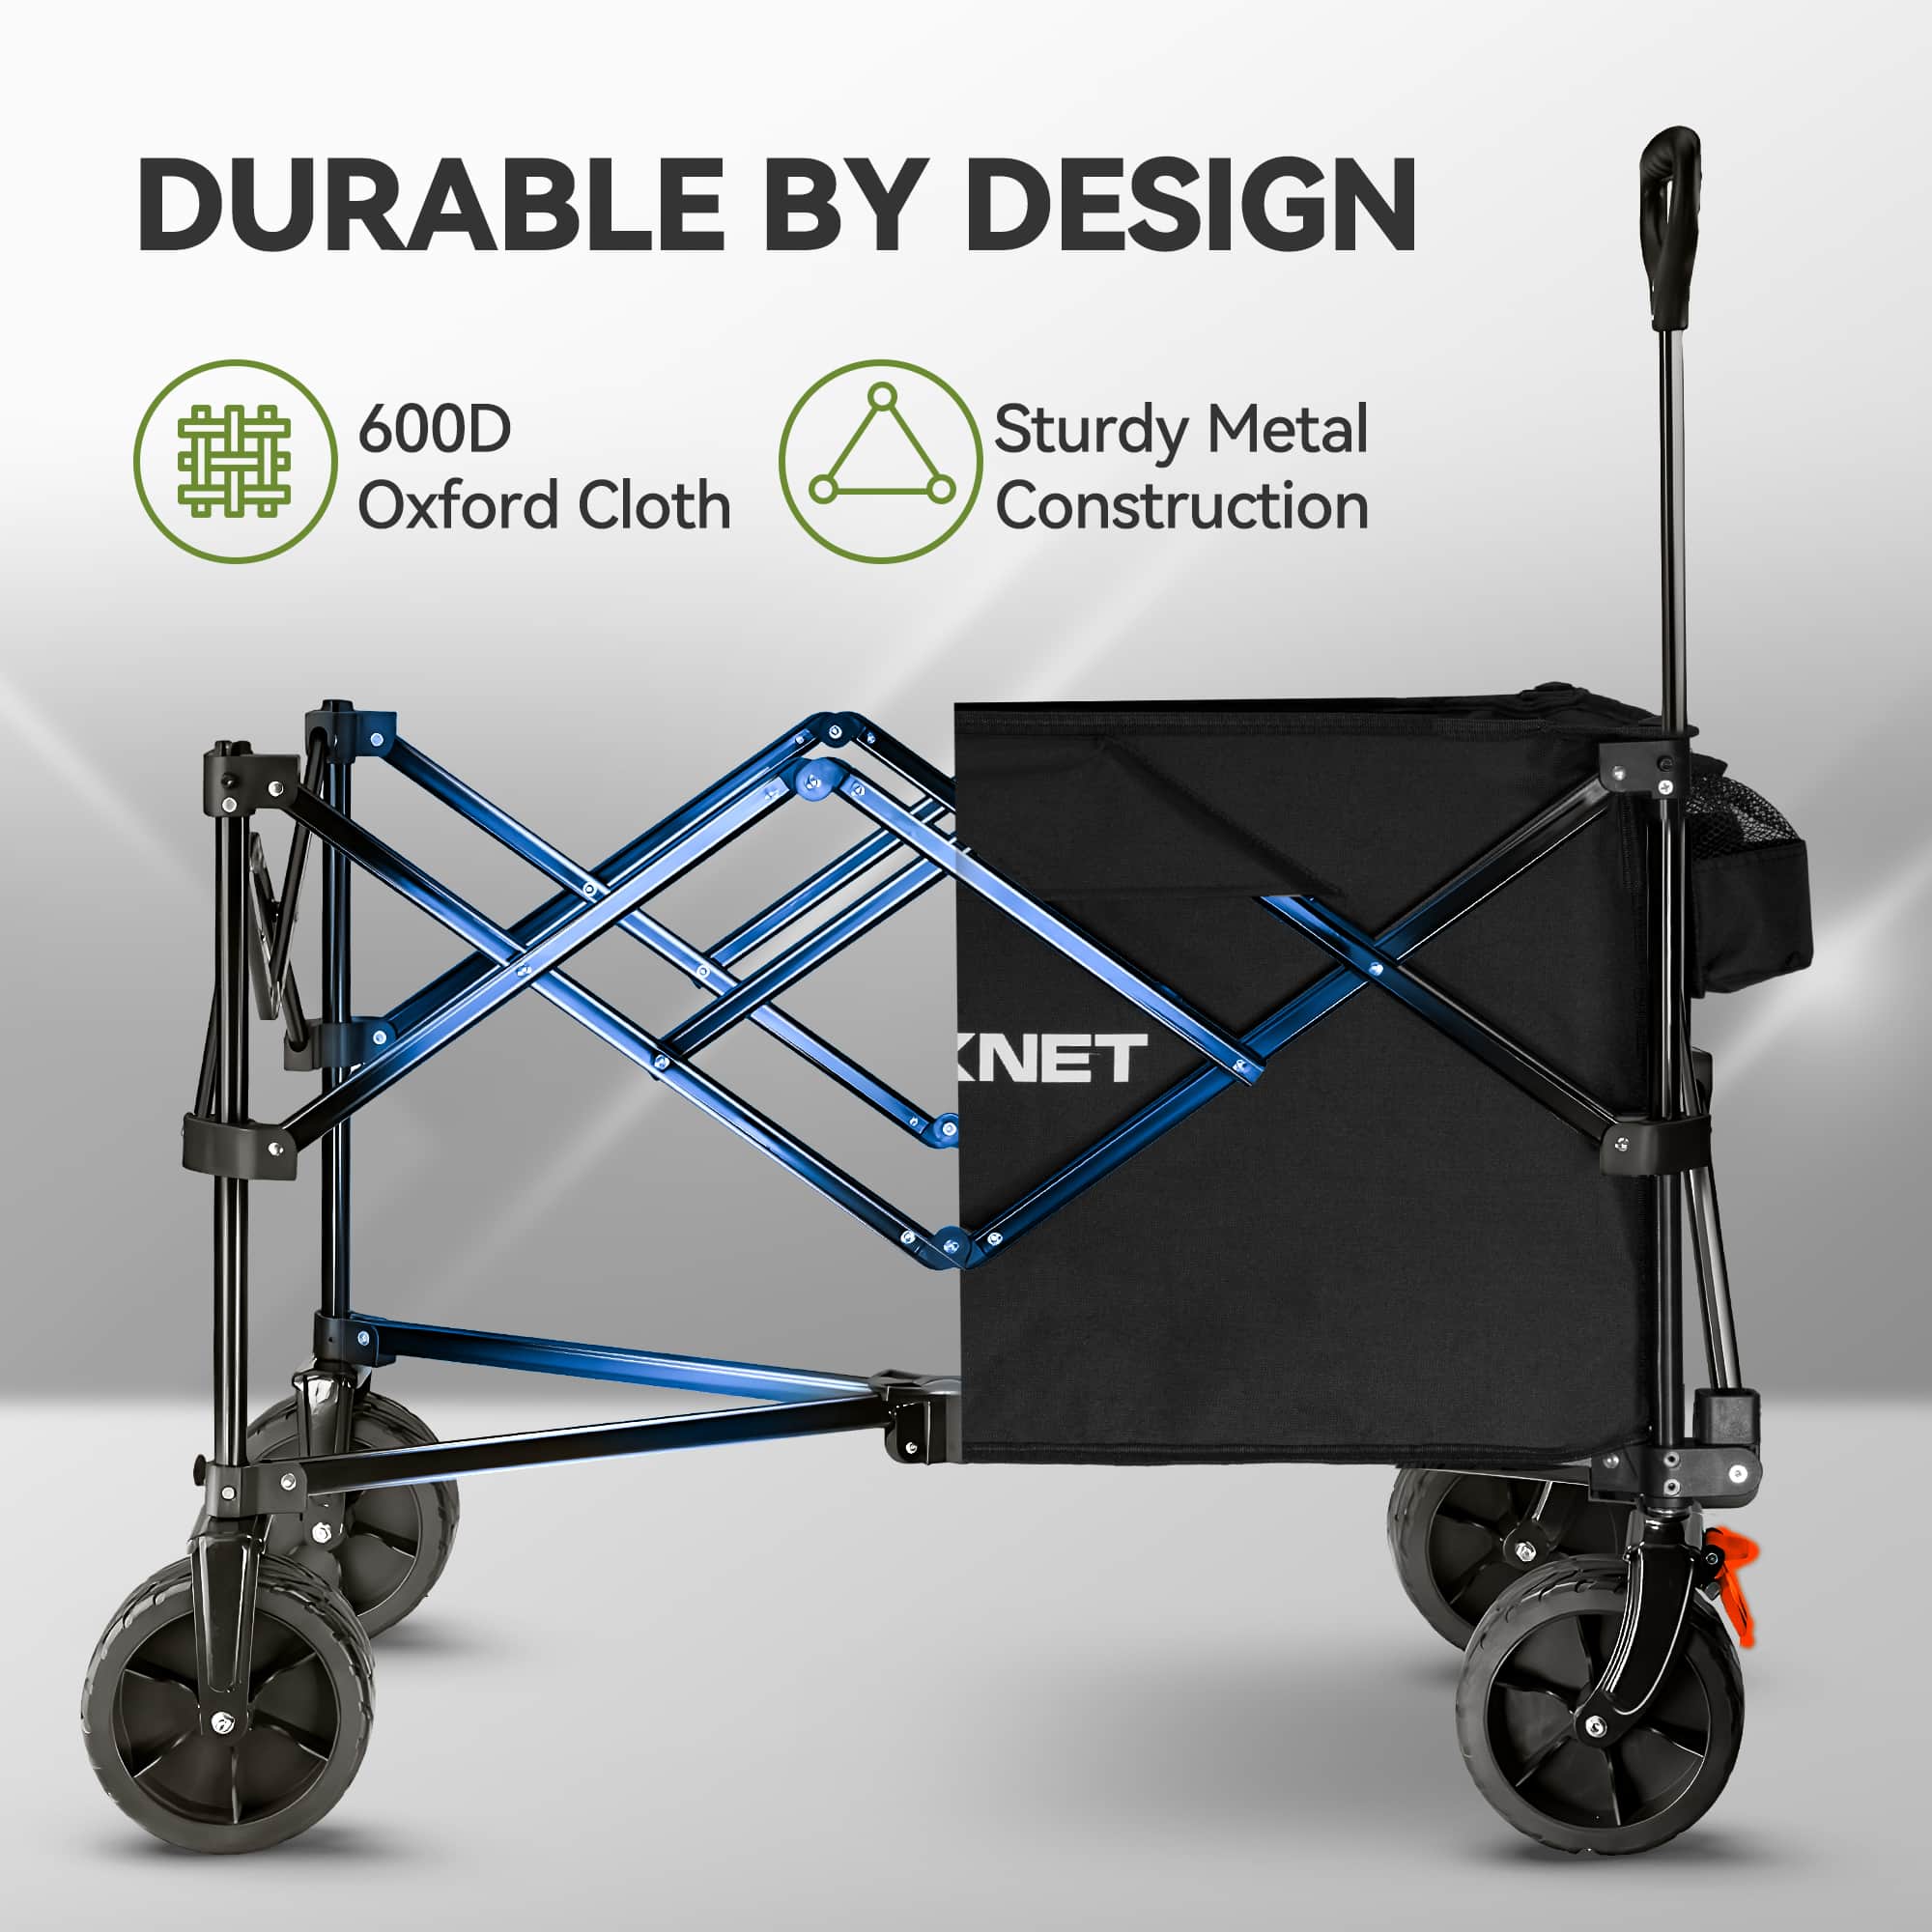 TECKNET Folding Wagon Heavy Duty All-Terrain Collapsible Camping Trolley Cart 180L